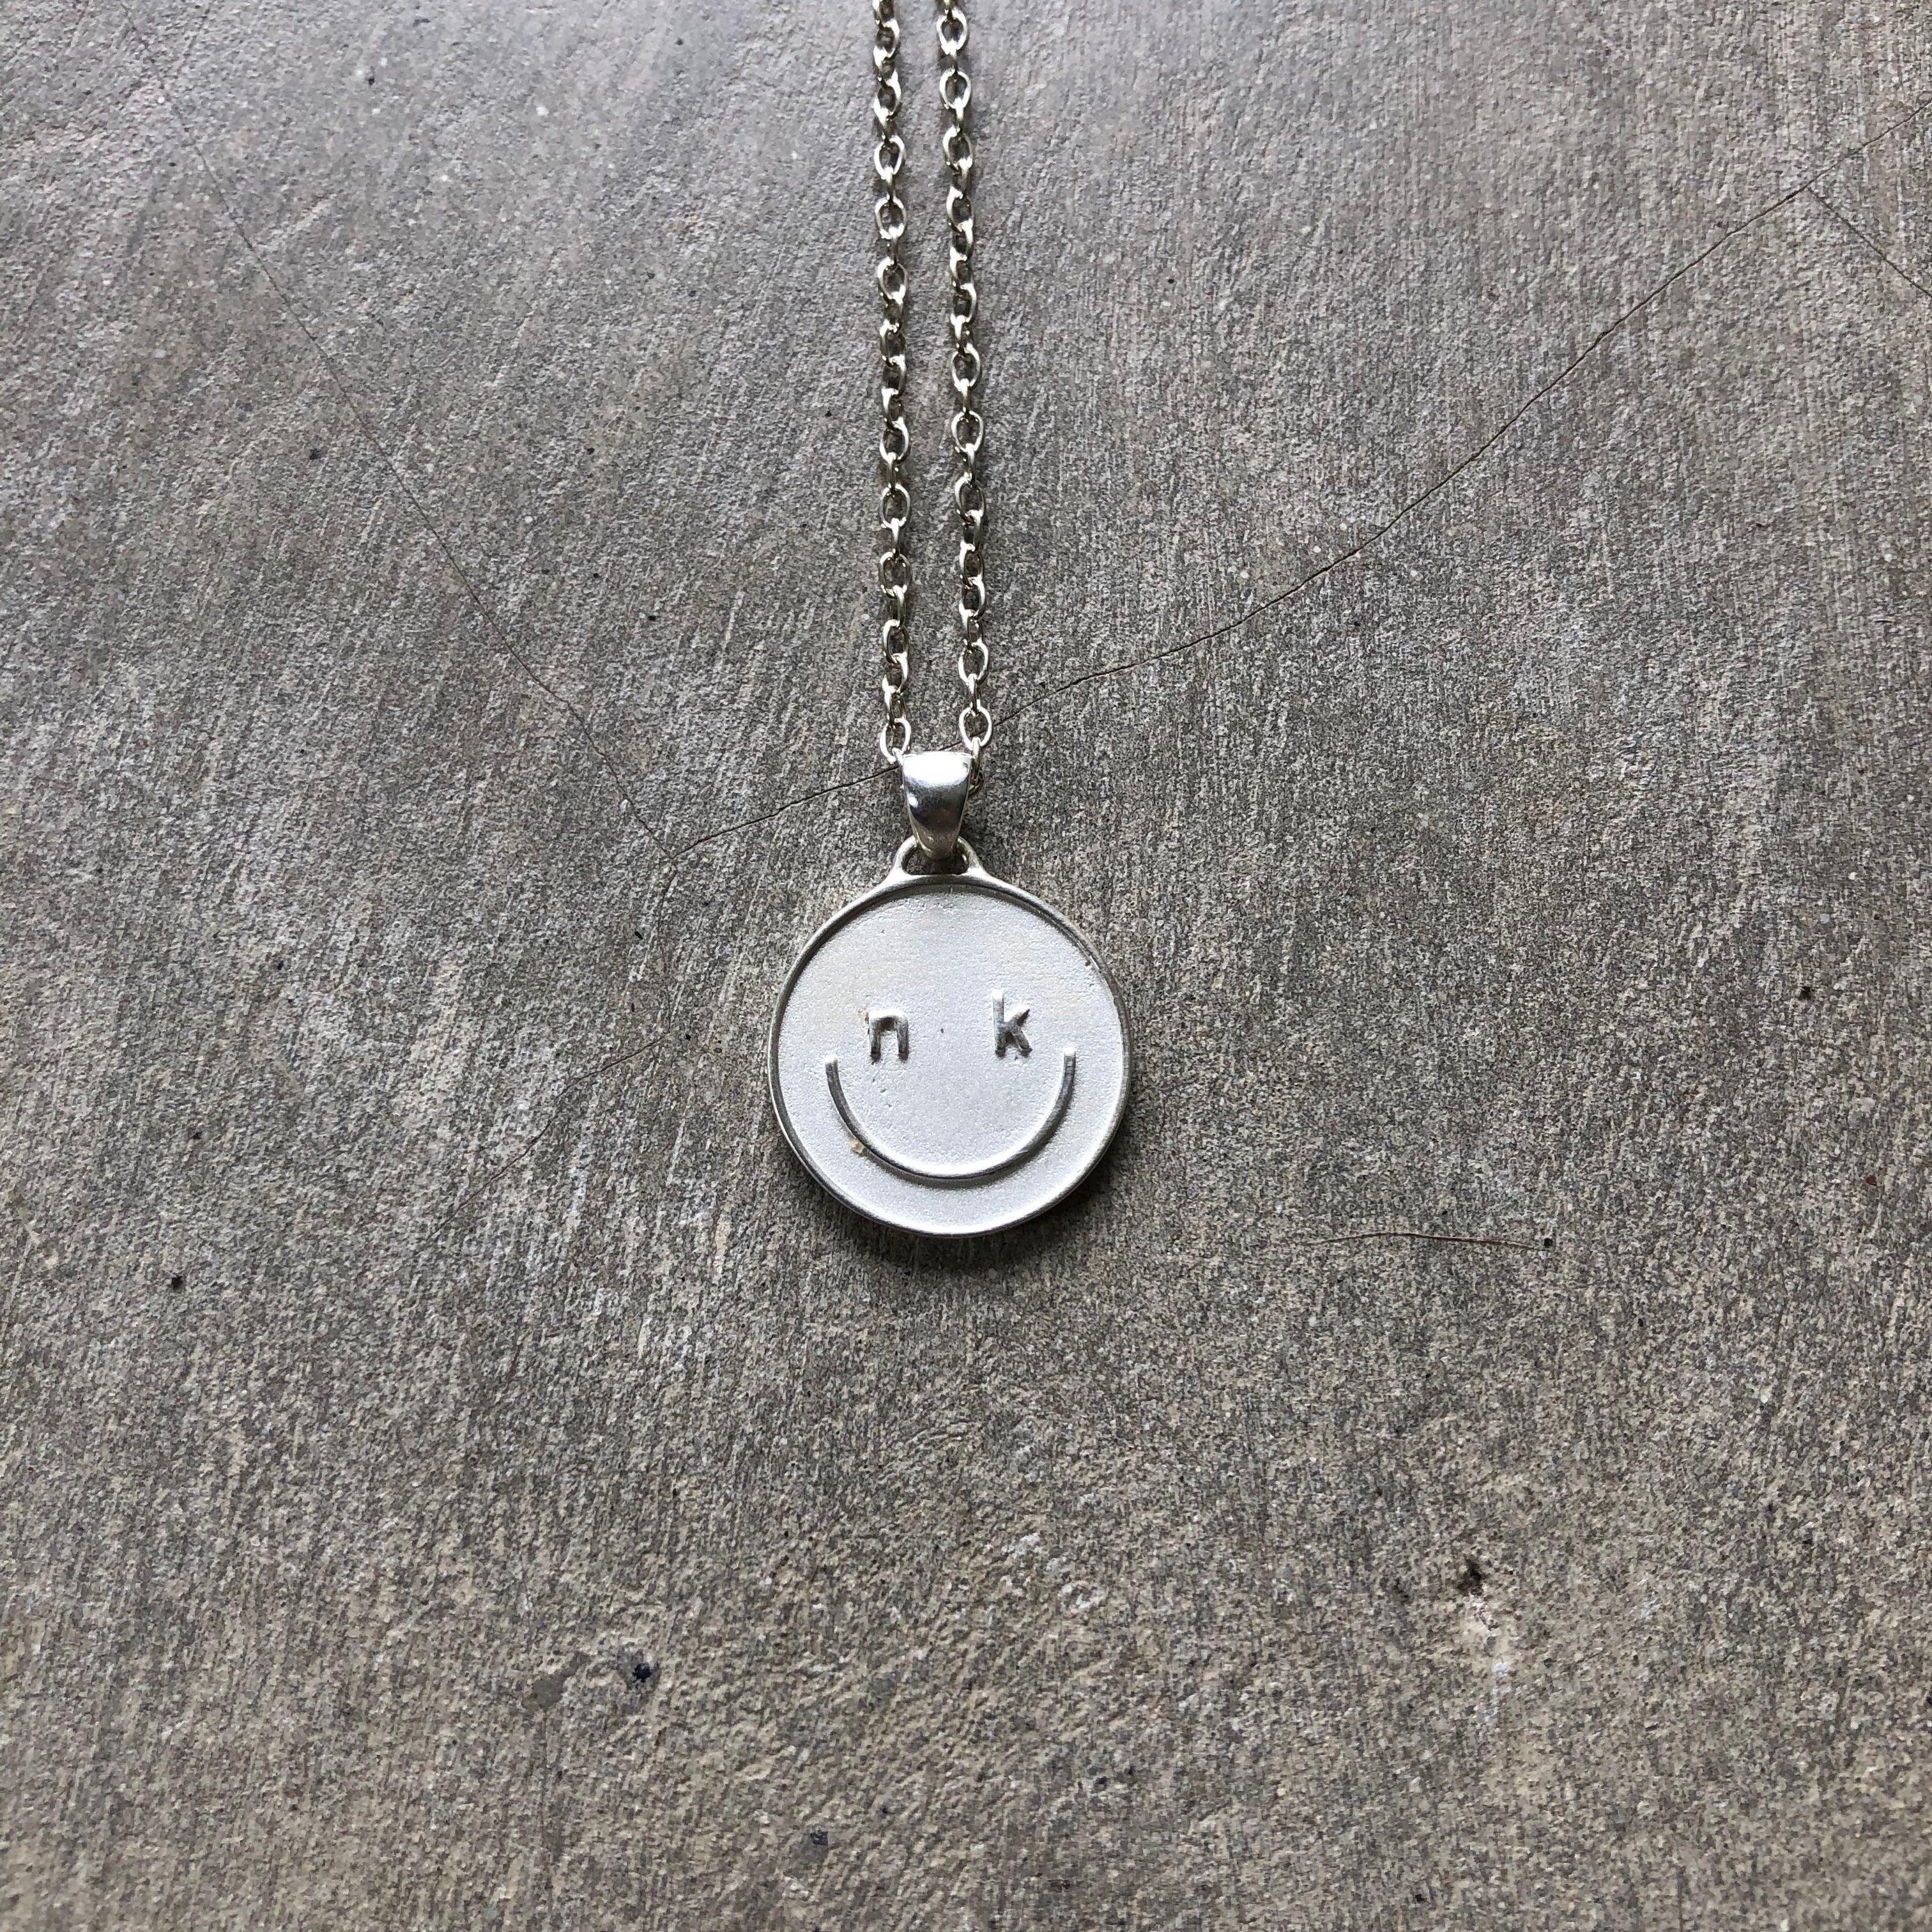 VIKA jewels Nina Kraviz pendant smiley necklace jewellery merch recycled sterling silver unisex